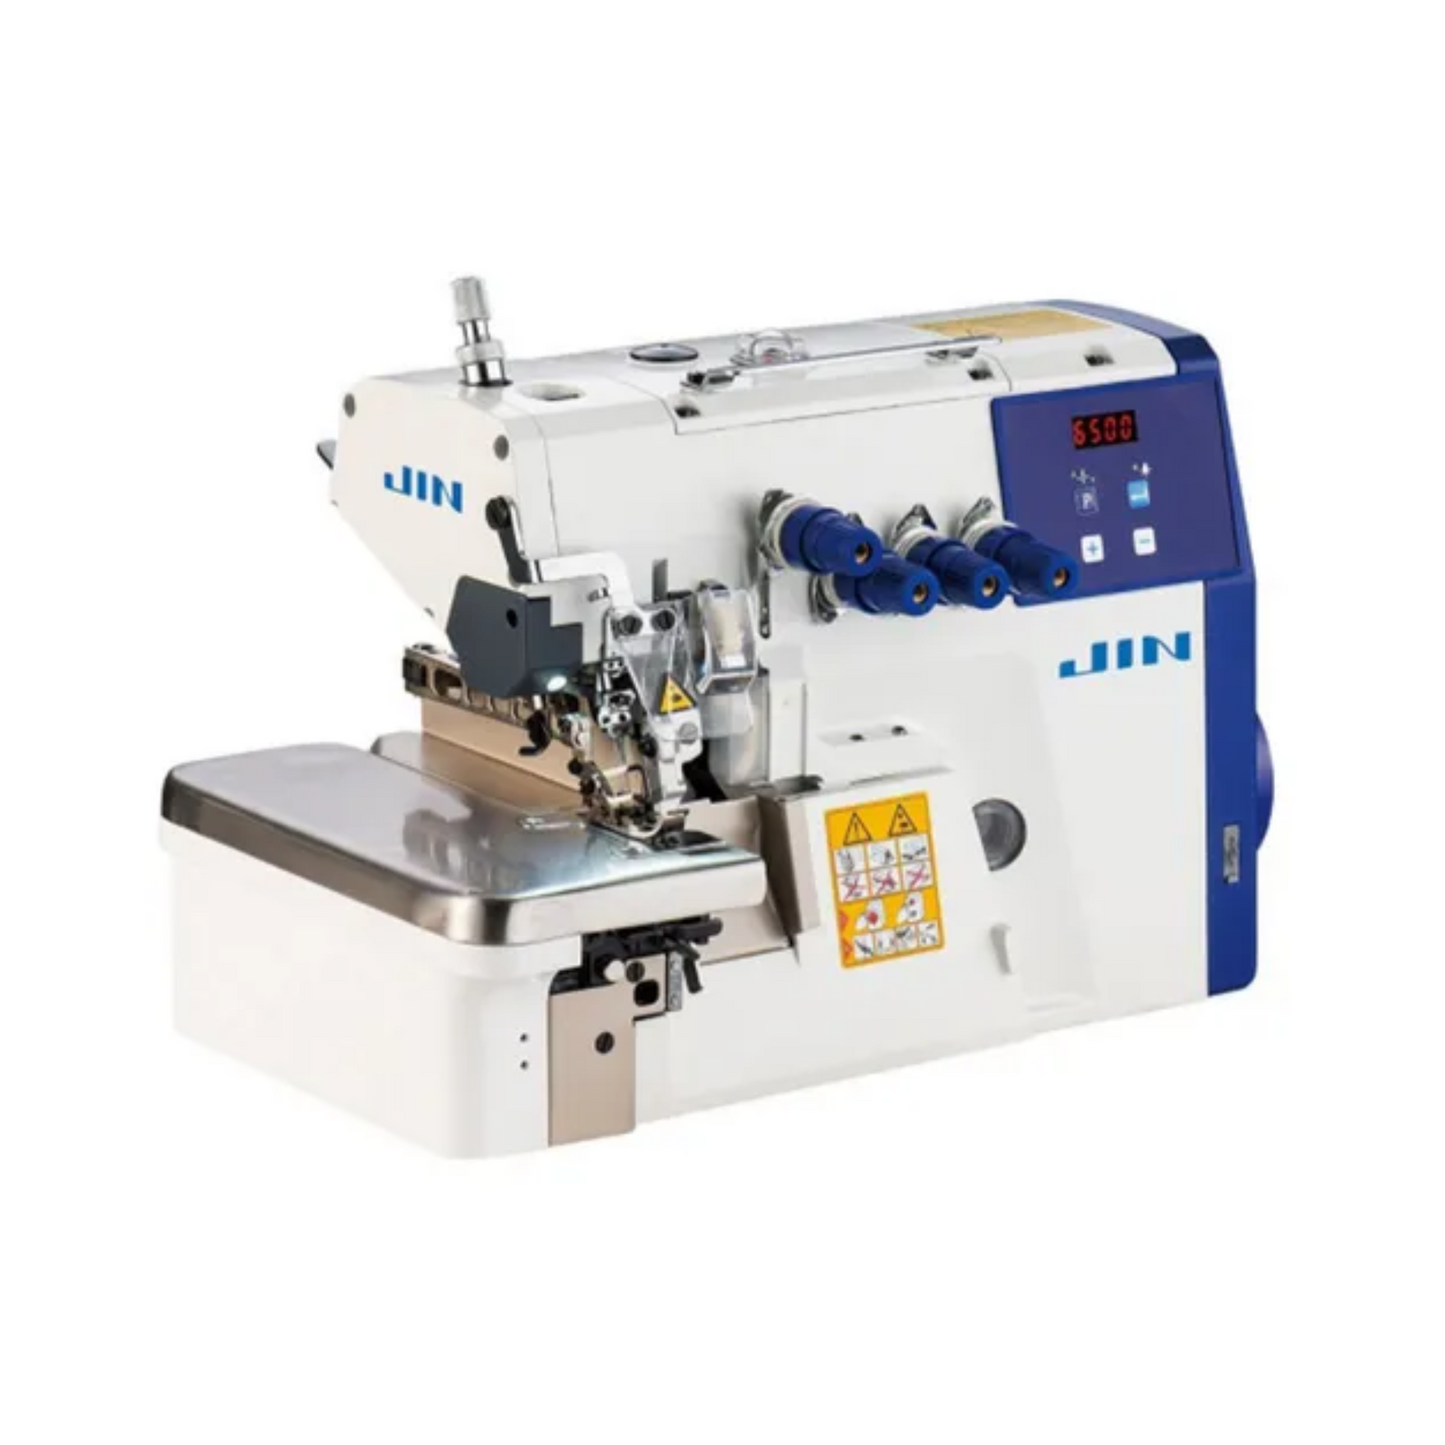 Juki overlock sewing machine Jin M1-556NS